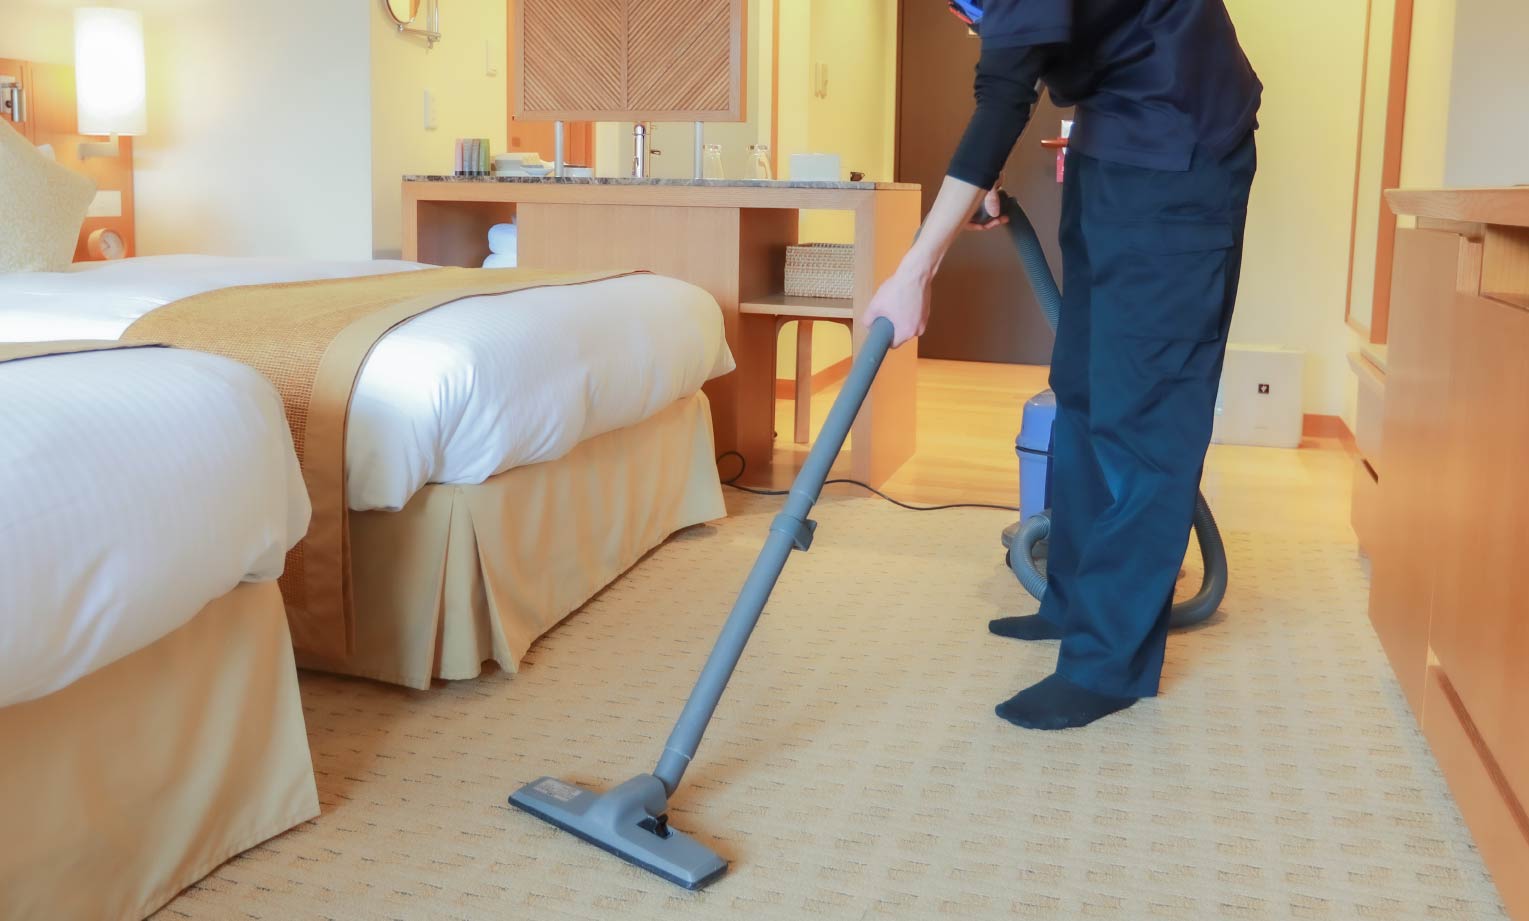 ホテル清掃・常駐管理業務全般